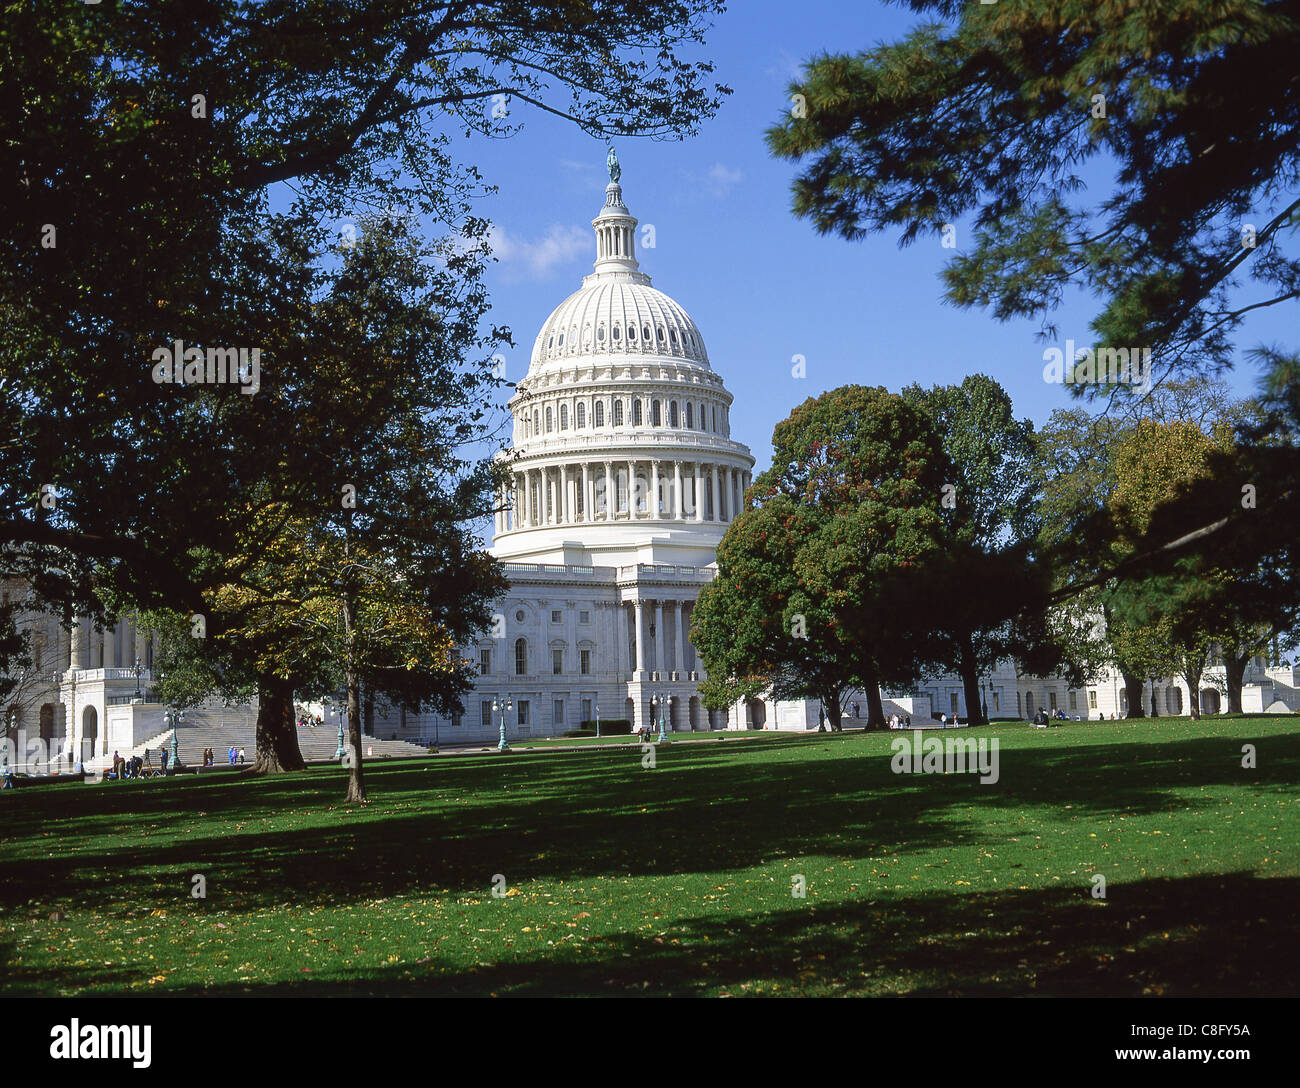 Das United States Capitol Building, Kapitol, Washington DC, Vereinigte Staaten von Amerika Stockfoto